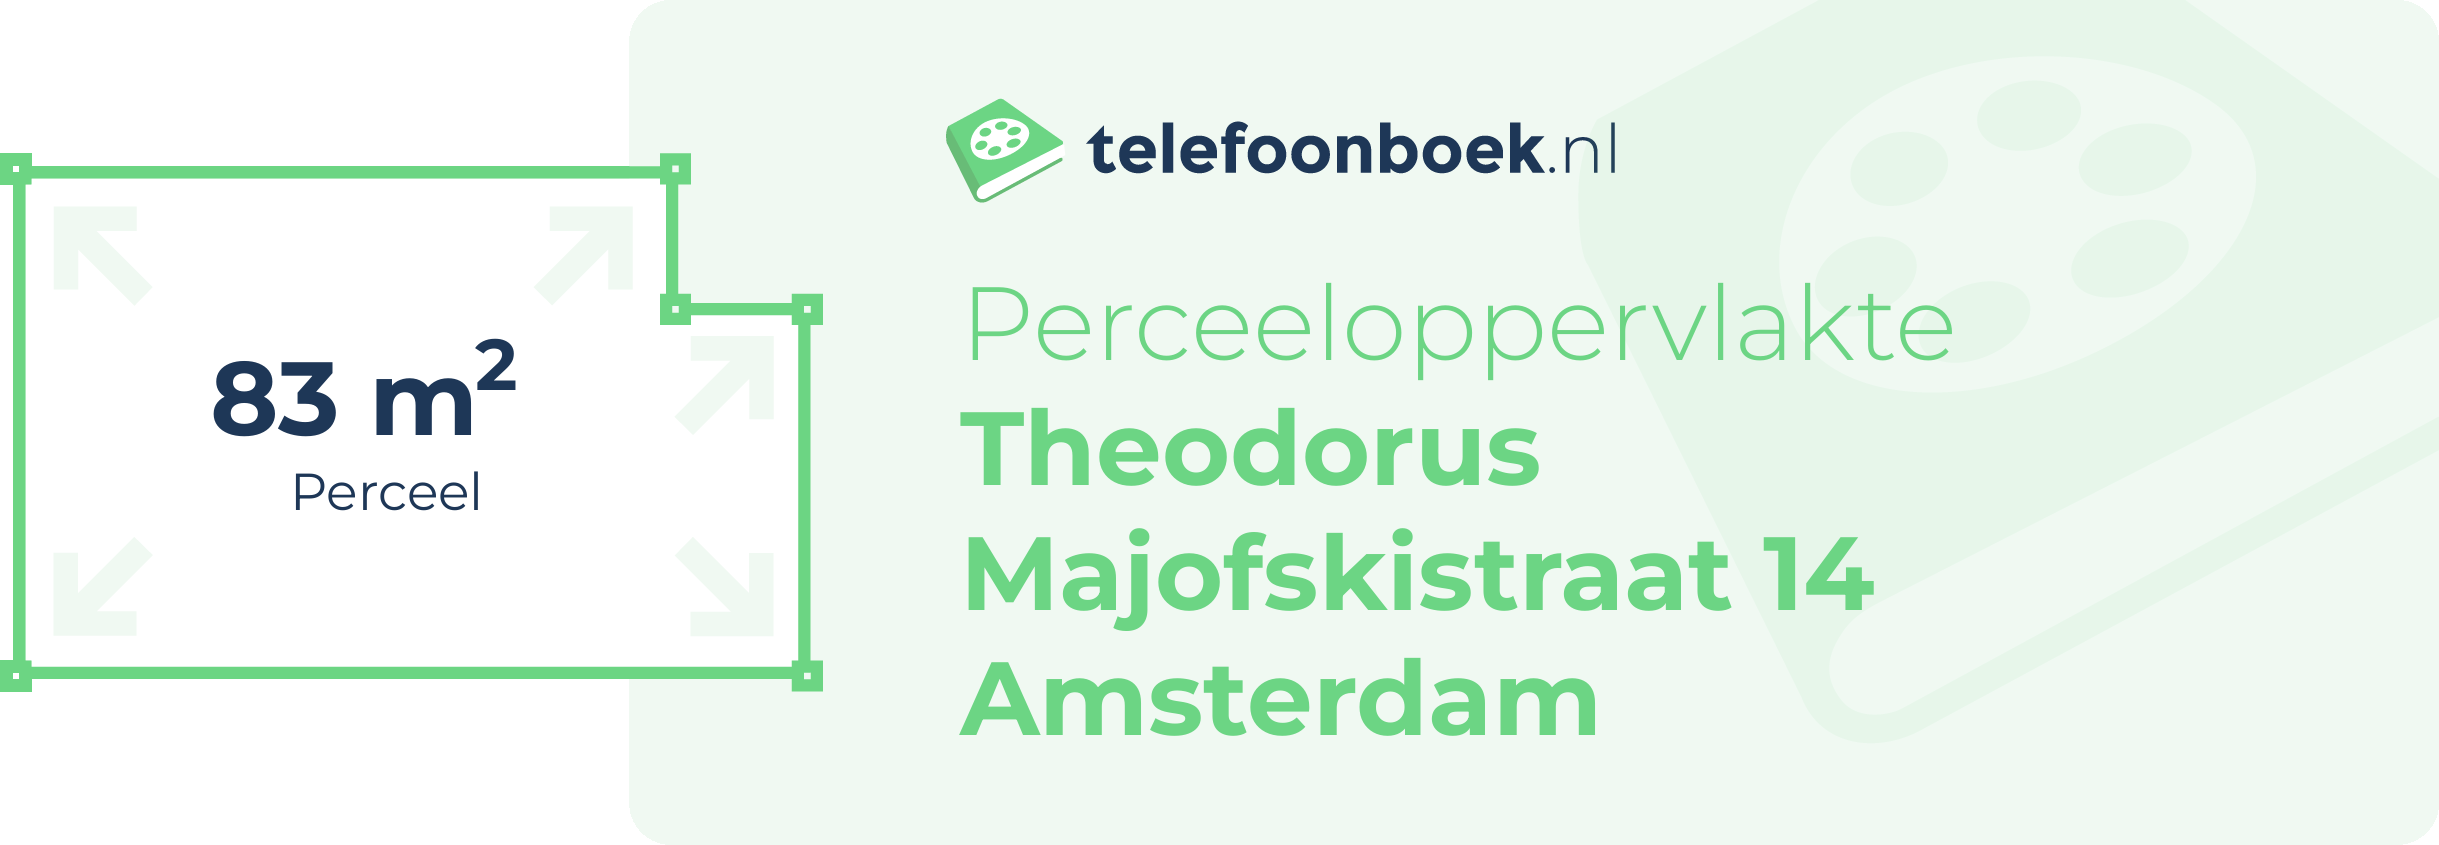 Perceeloppervlakte Theodorus Majofskistraat 14 Amsterdam